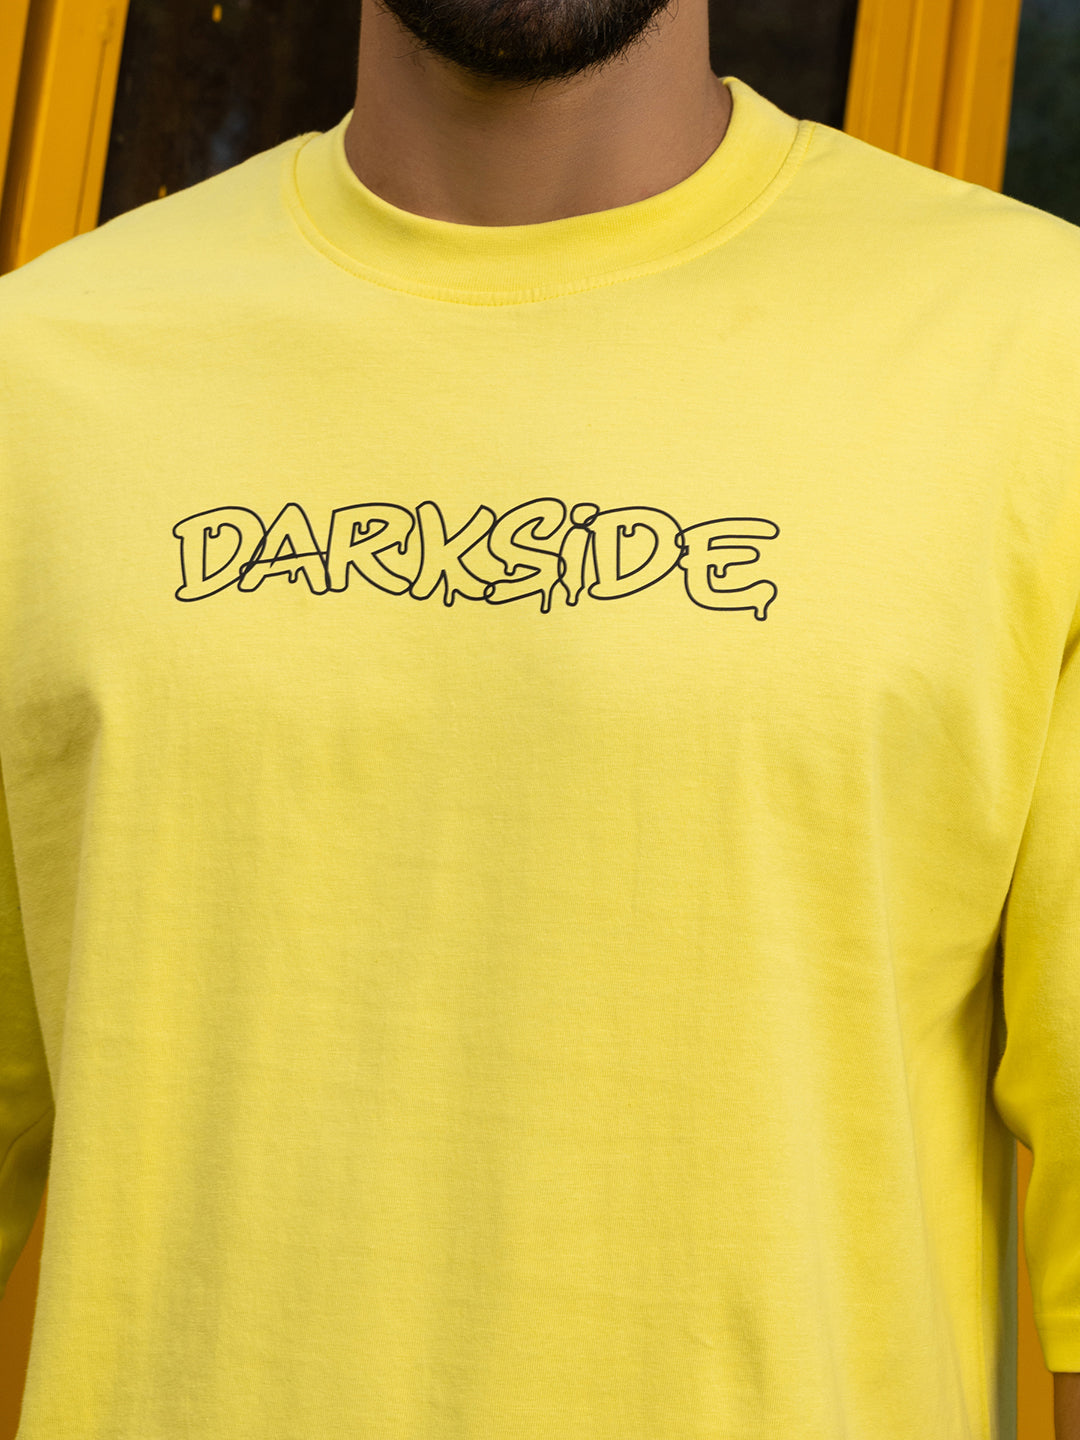 Darkside Lemon Yellow Oversized Drop shoulder Tee by Gavin Paris